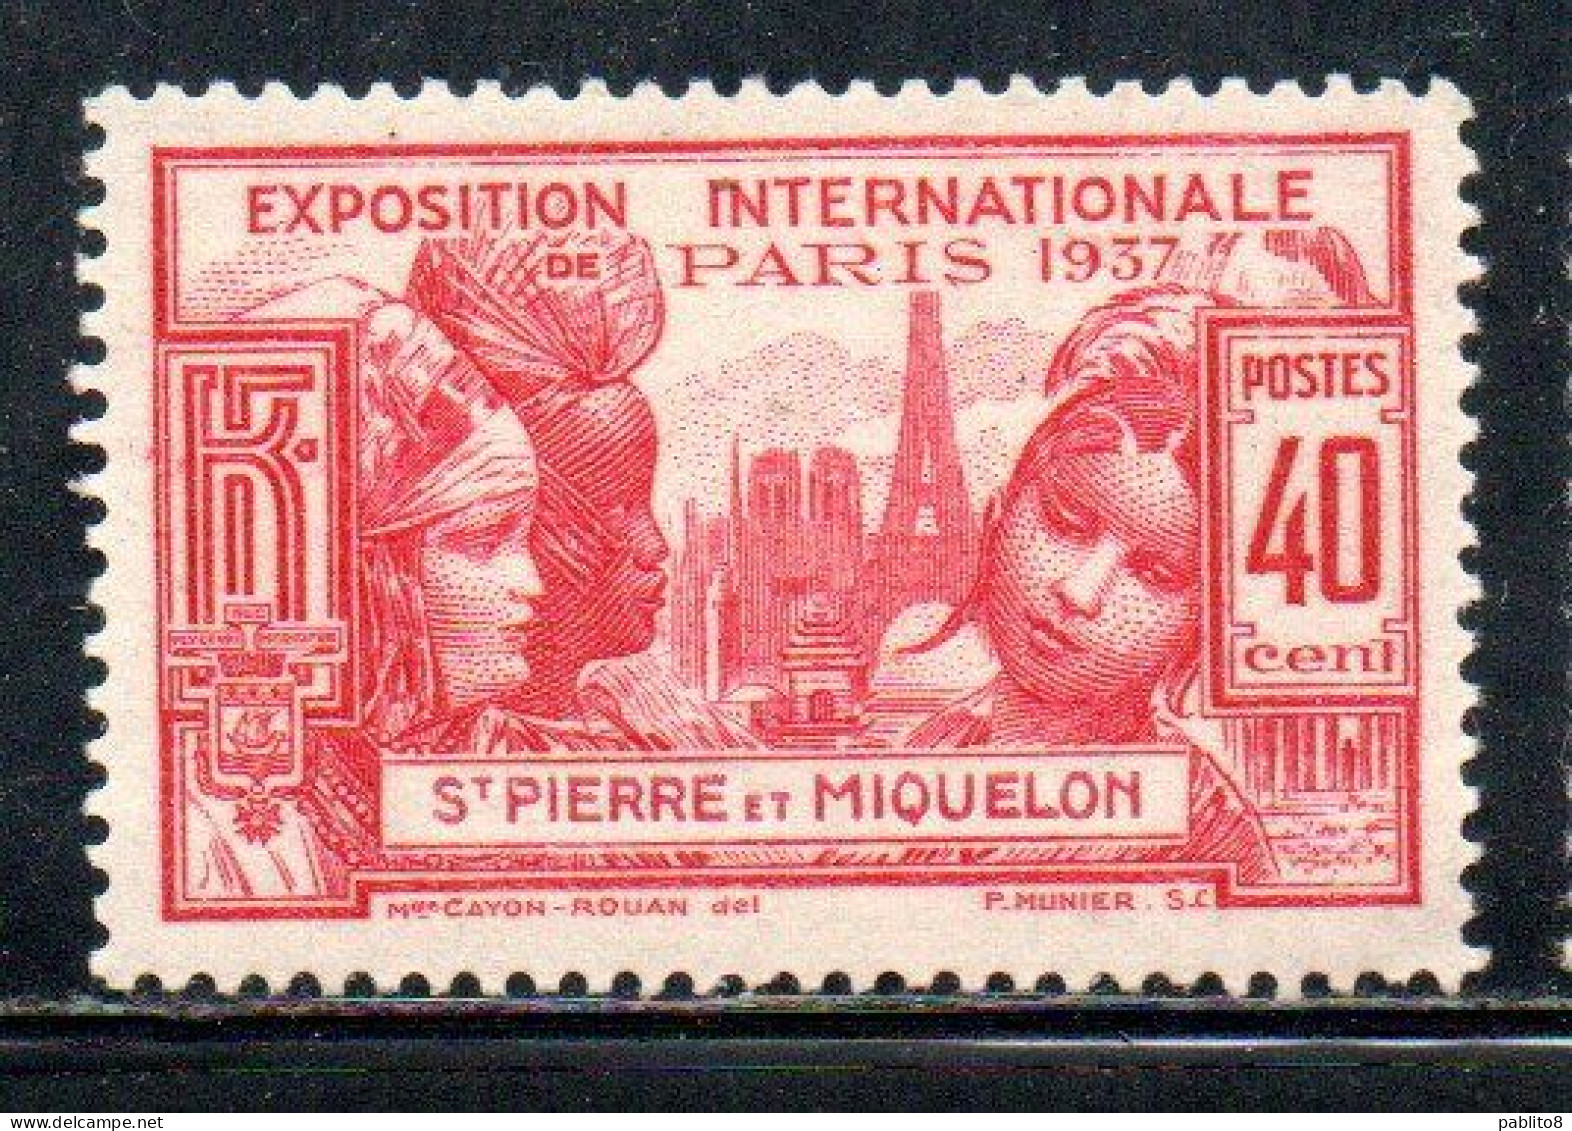 ST. SAINT PIERRE AND ET MIQUELON 1937 PARIS INTERNATIONAL EXPOSITION ISSUE 40c MLH - Ungebraucht